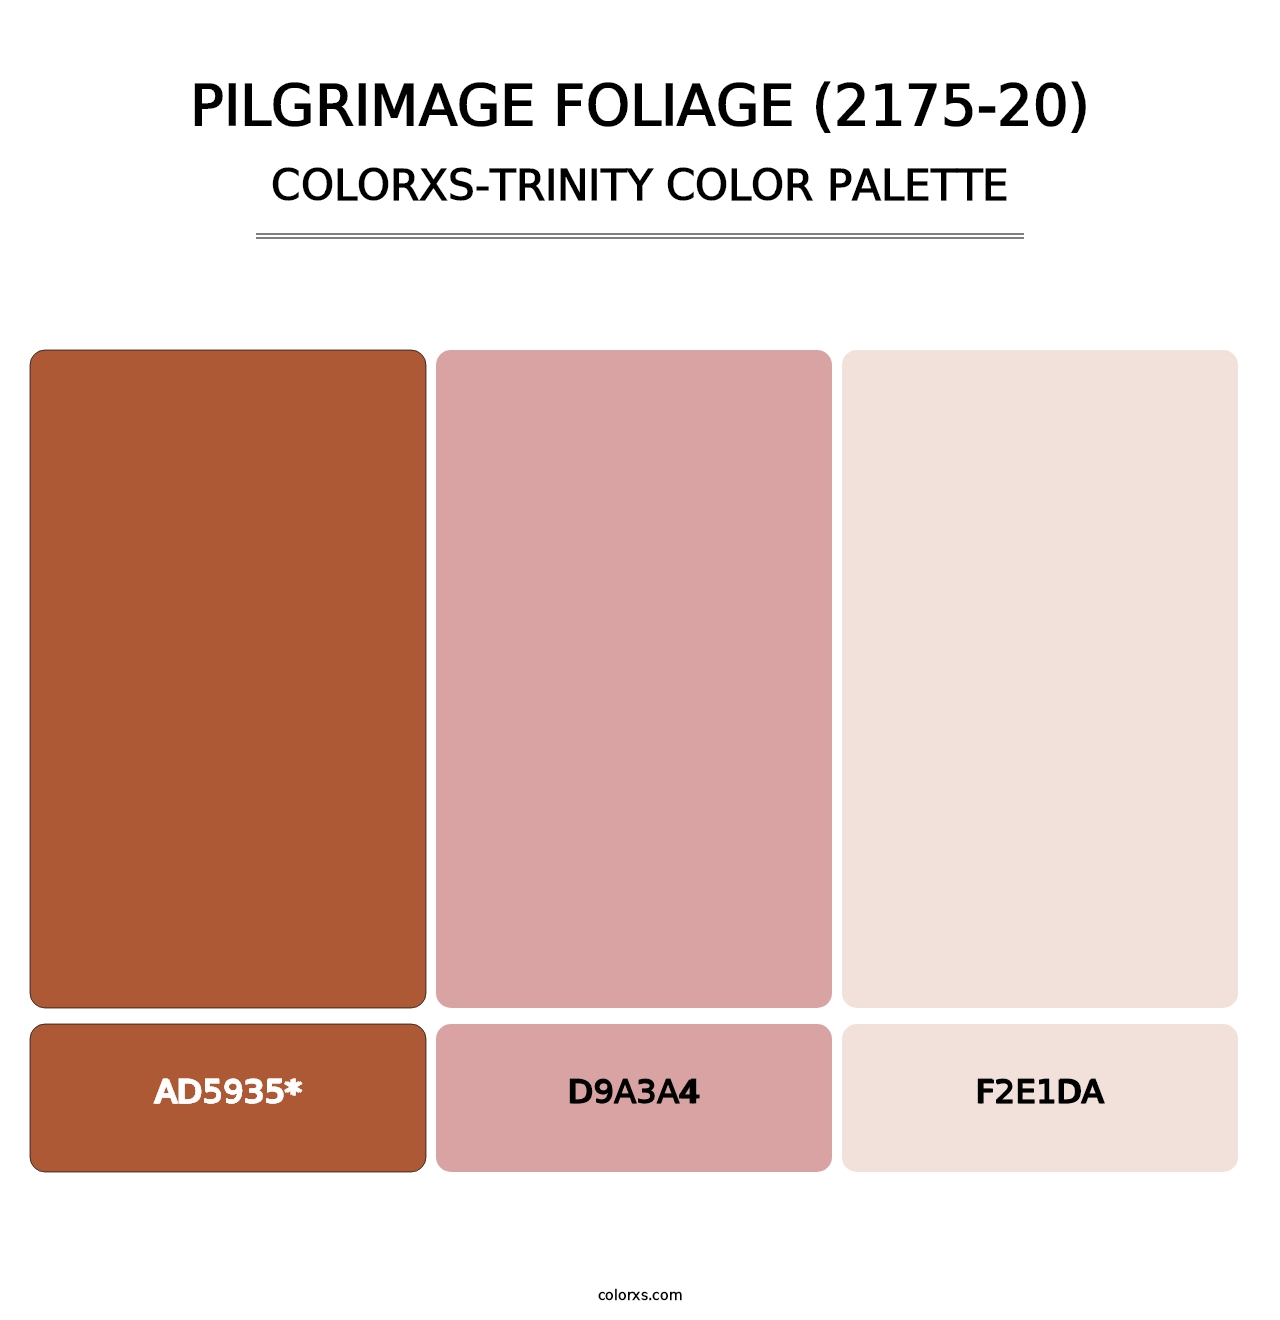 Pilgrimage Foliage (2175-20) - Colorxs Trinity Palette